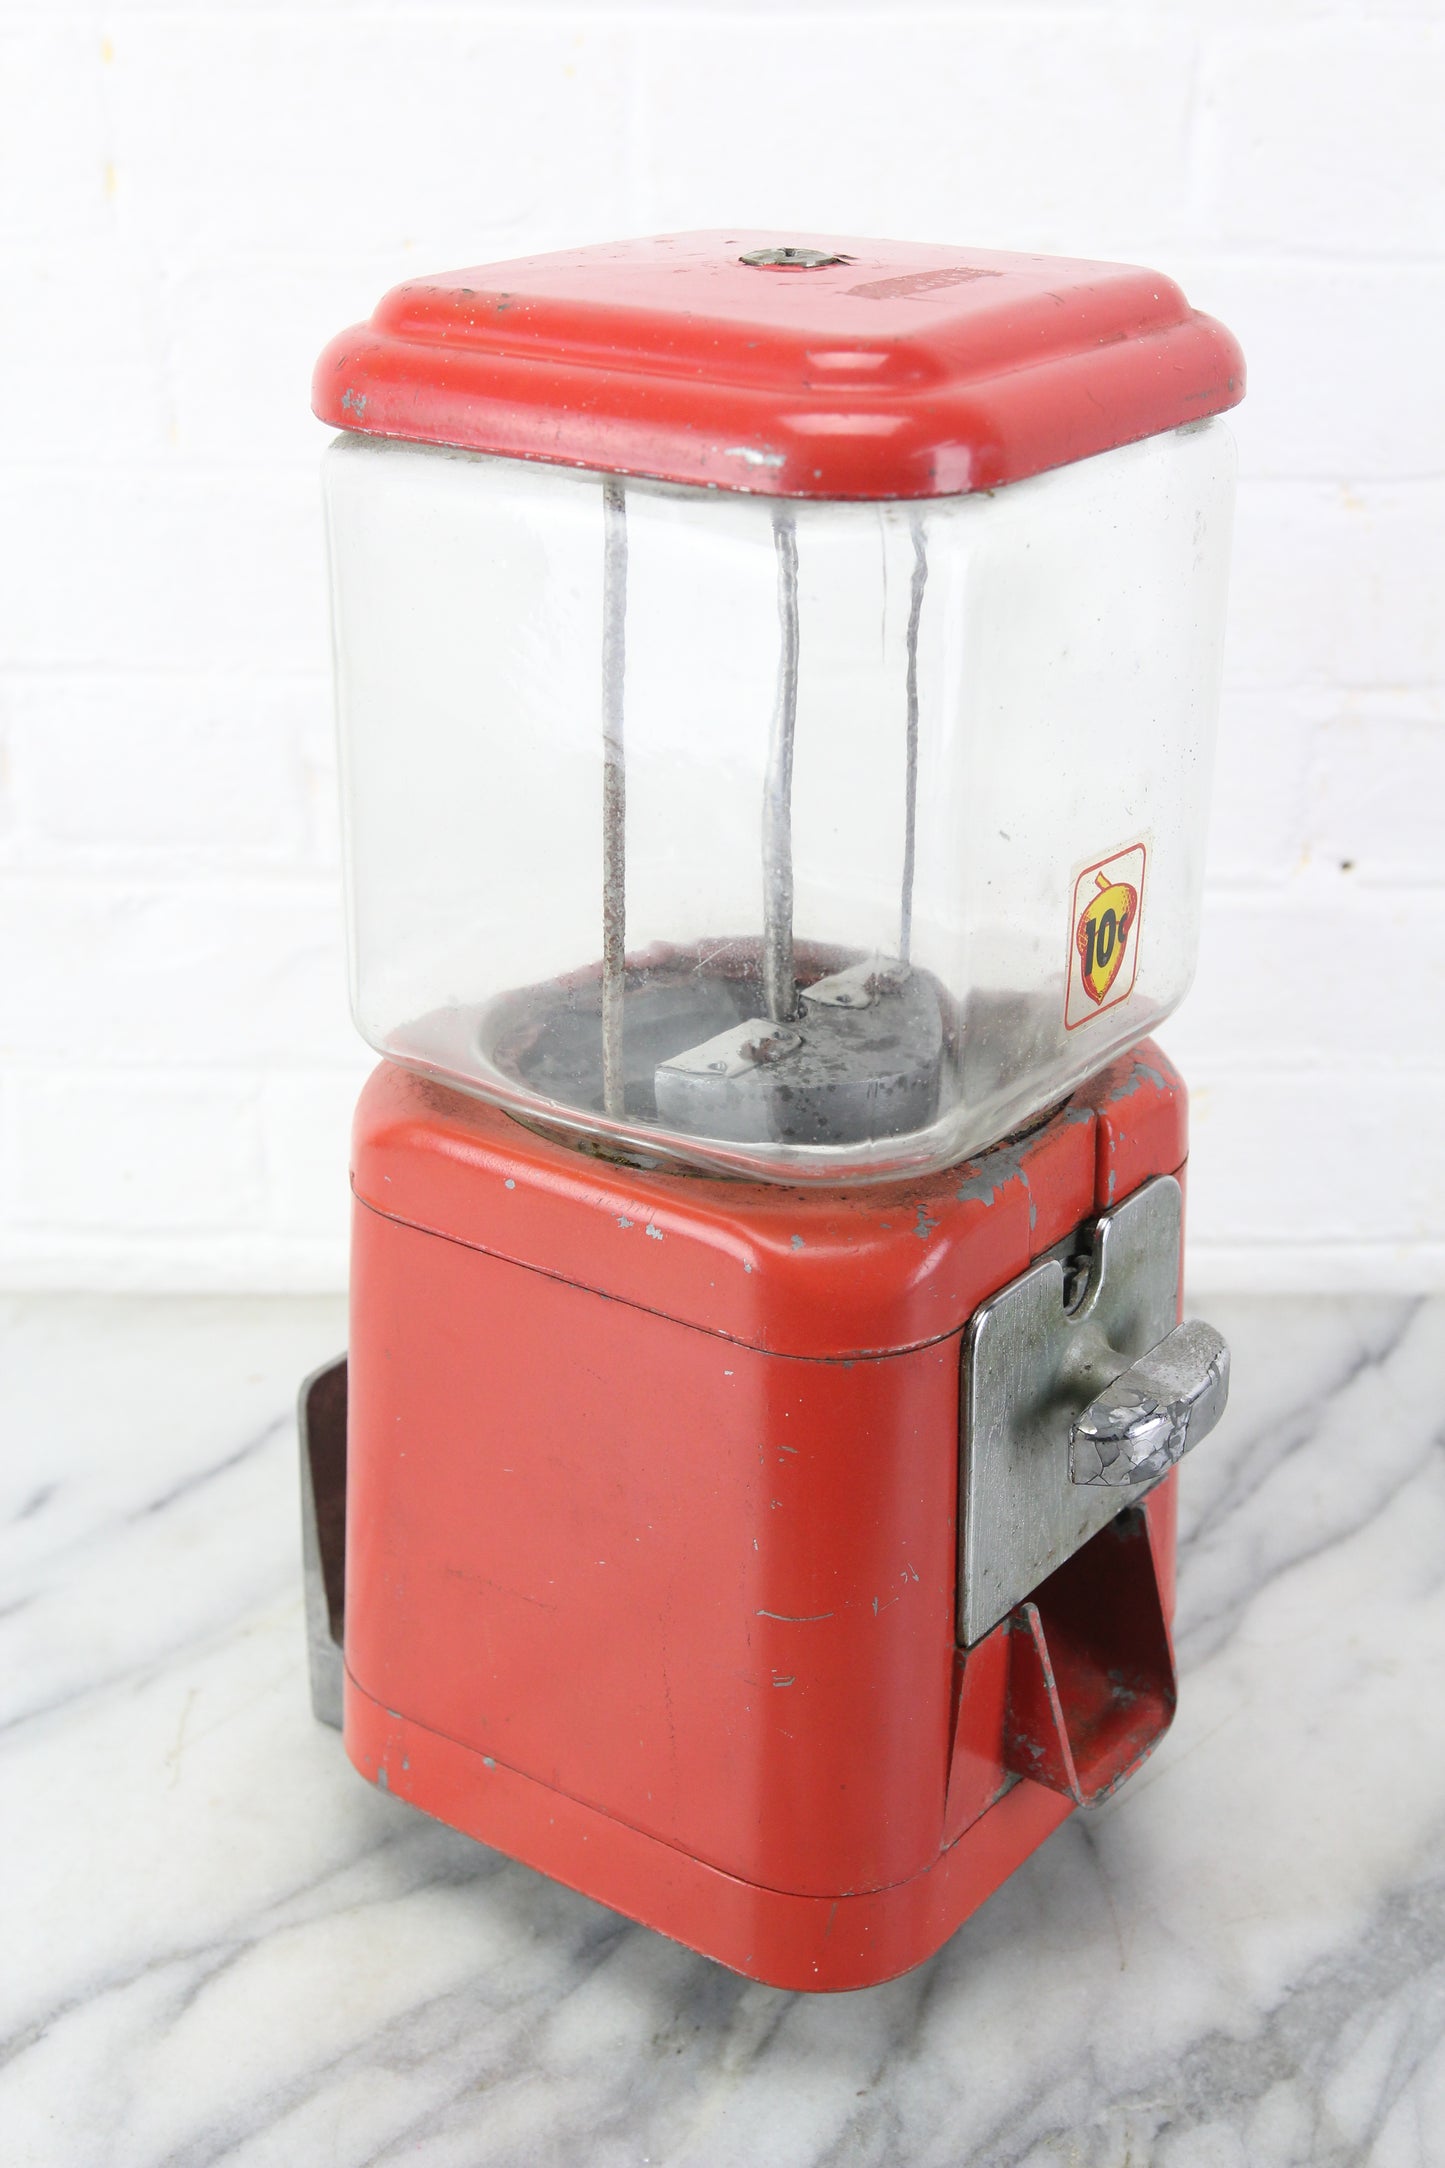 Oak Mfg. Co. Vintage 10-Cent Nut and Candy Vending Machine Dispenser